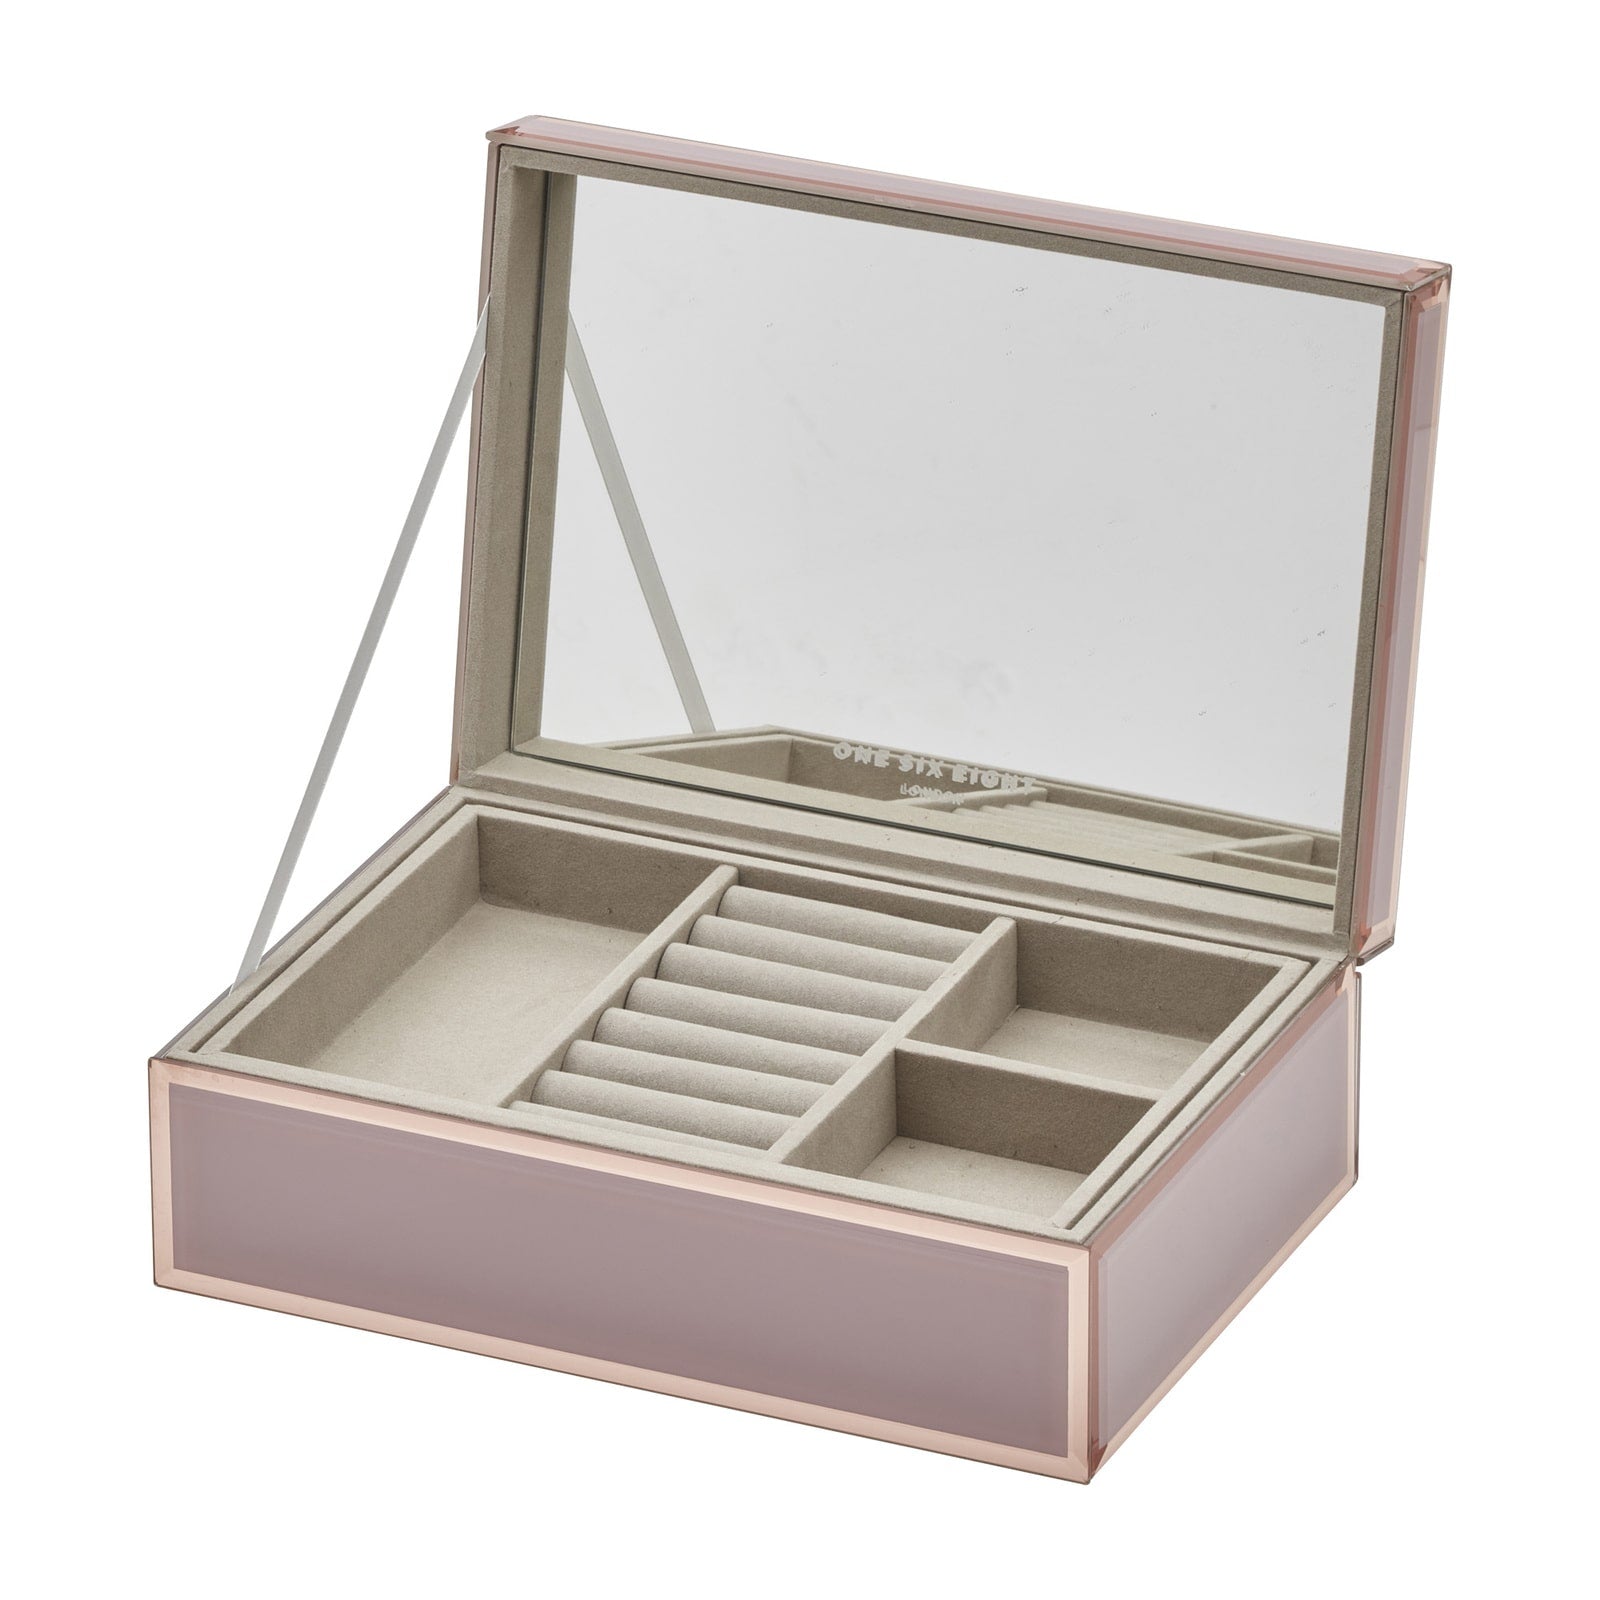 Sara Large Jewellery Box - Dusty Pink - box open